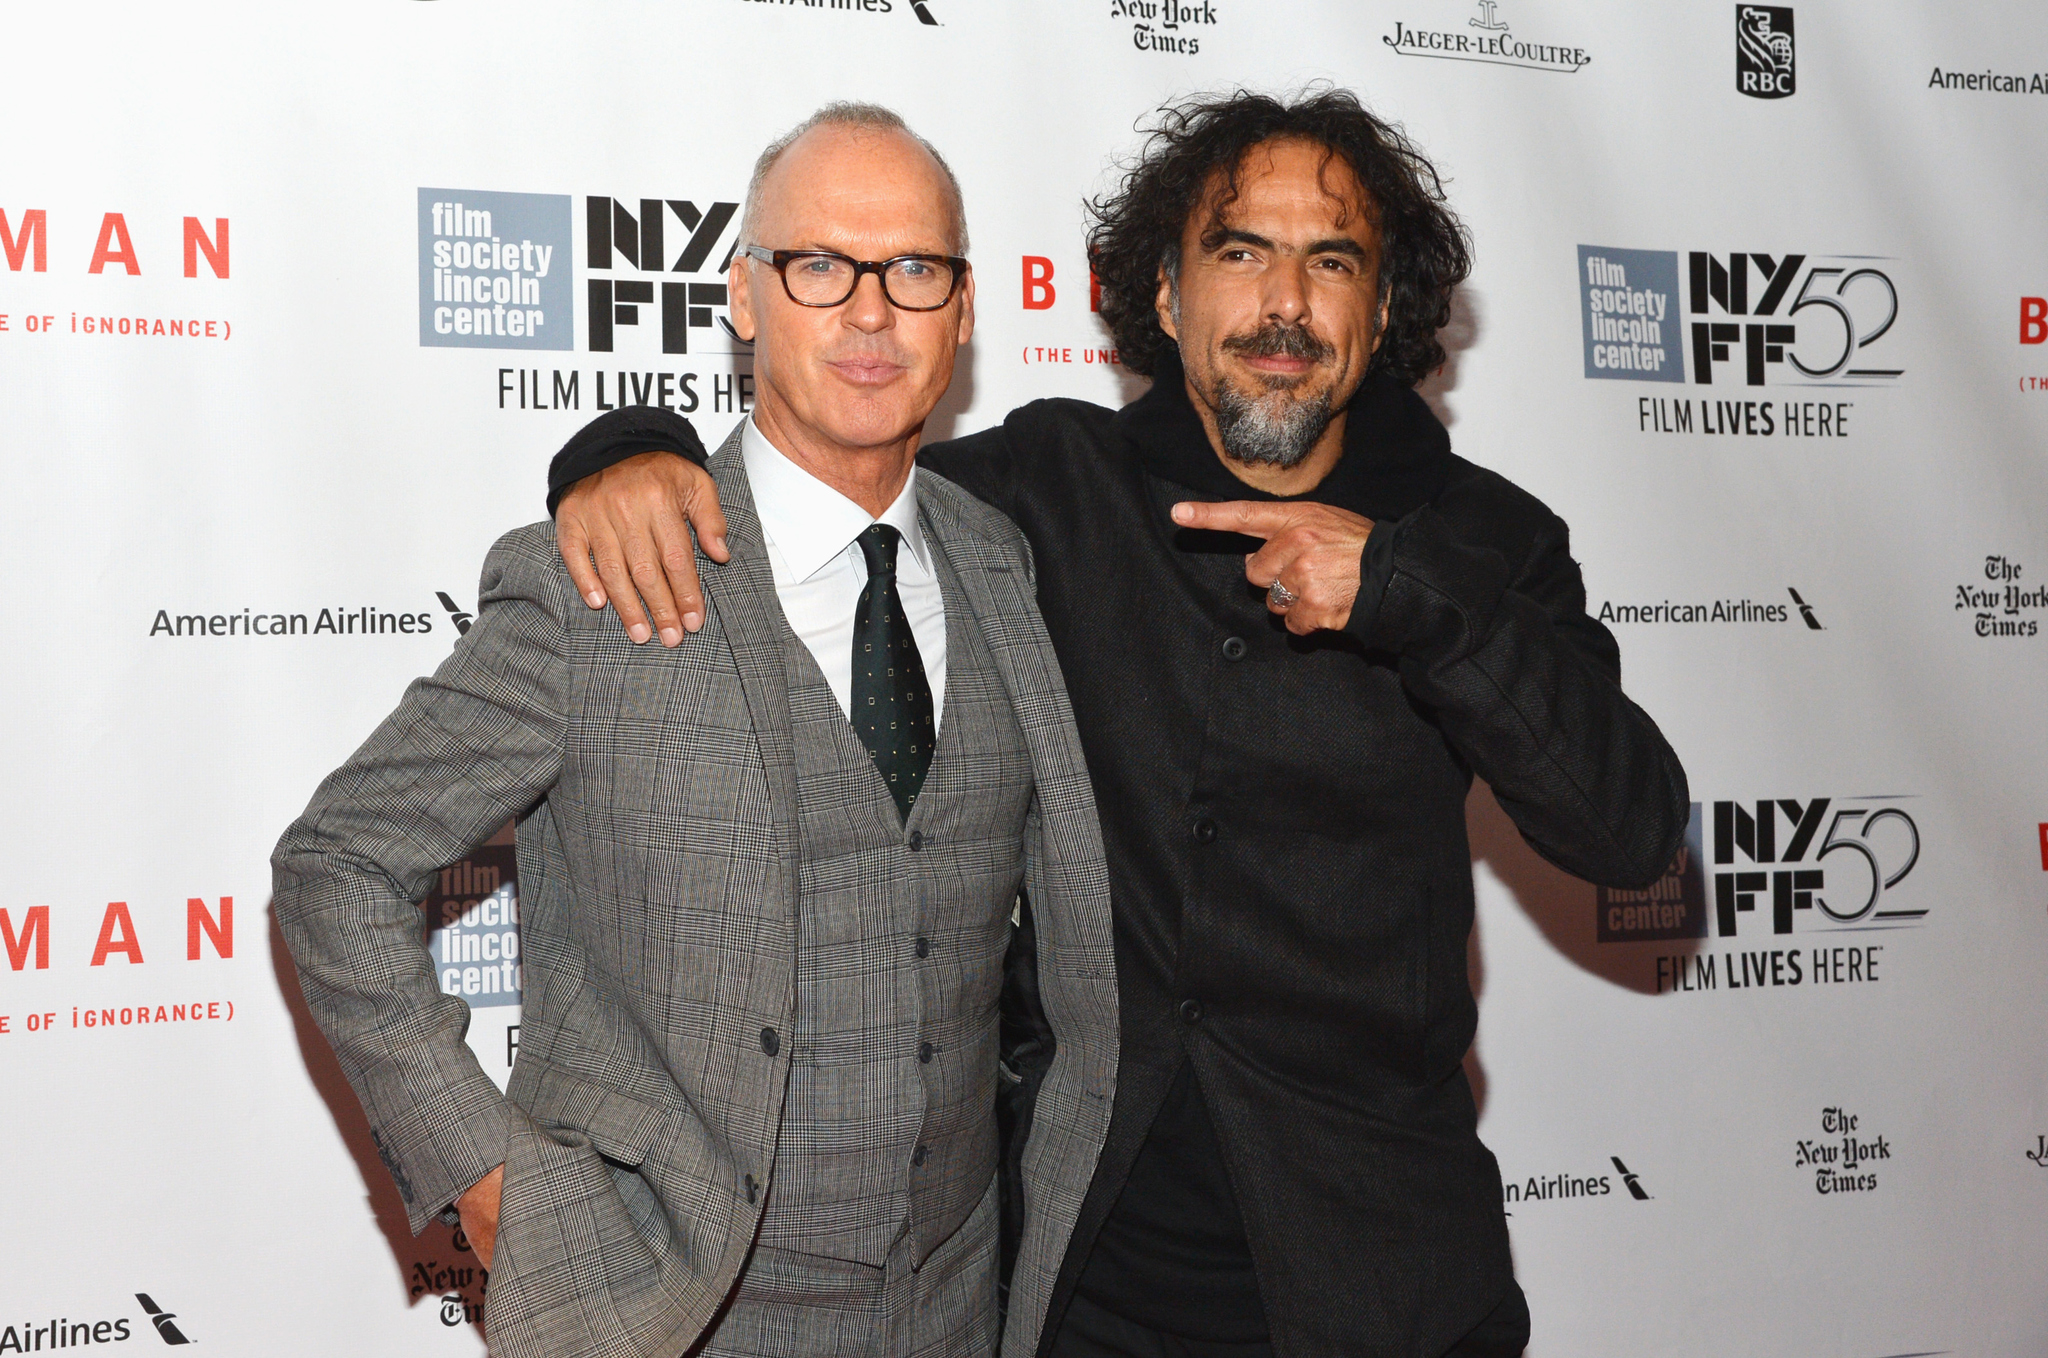 Michael Keaton and Alejandro González Iñárritu at event of Zmogus-paukstis (2014)